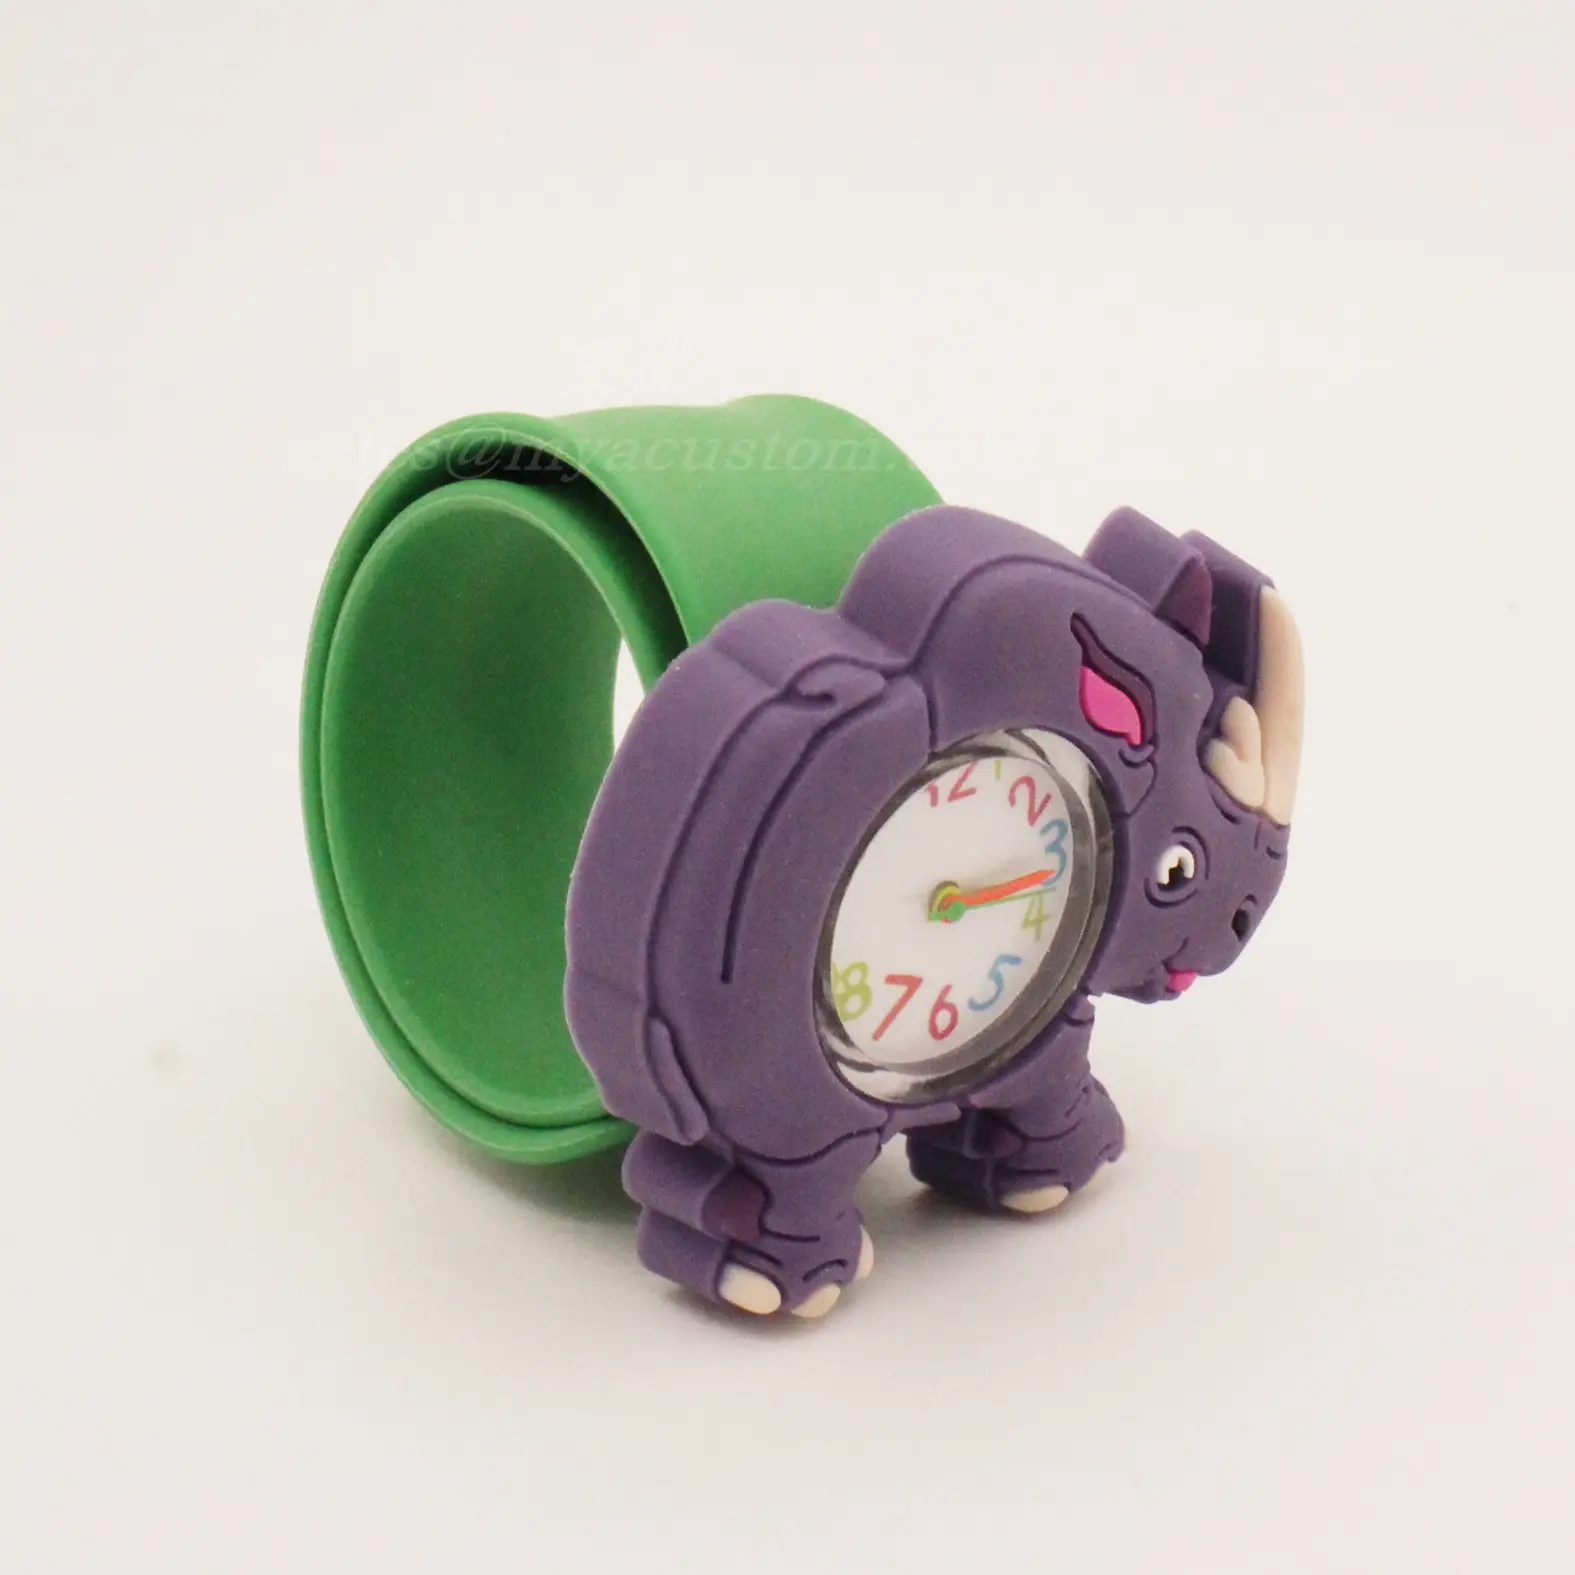 Caliente Rhino forma silicona Slap diseño niños reloj Digital lindo diseño vaca forma chico pulsera reloj